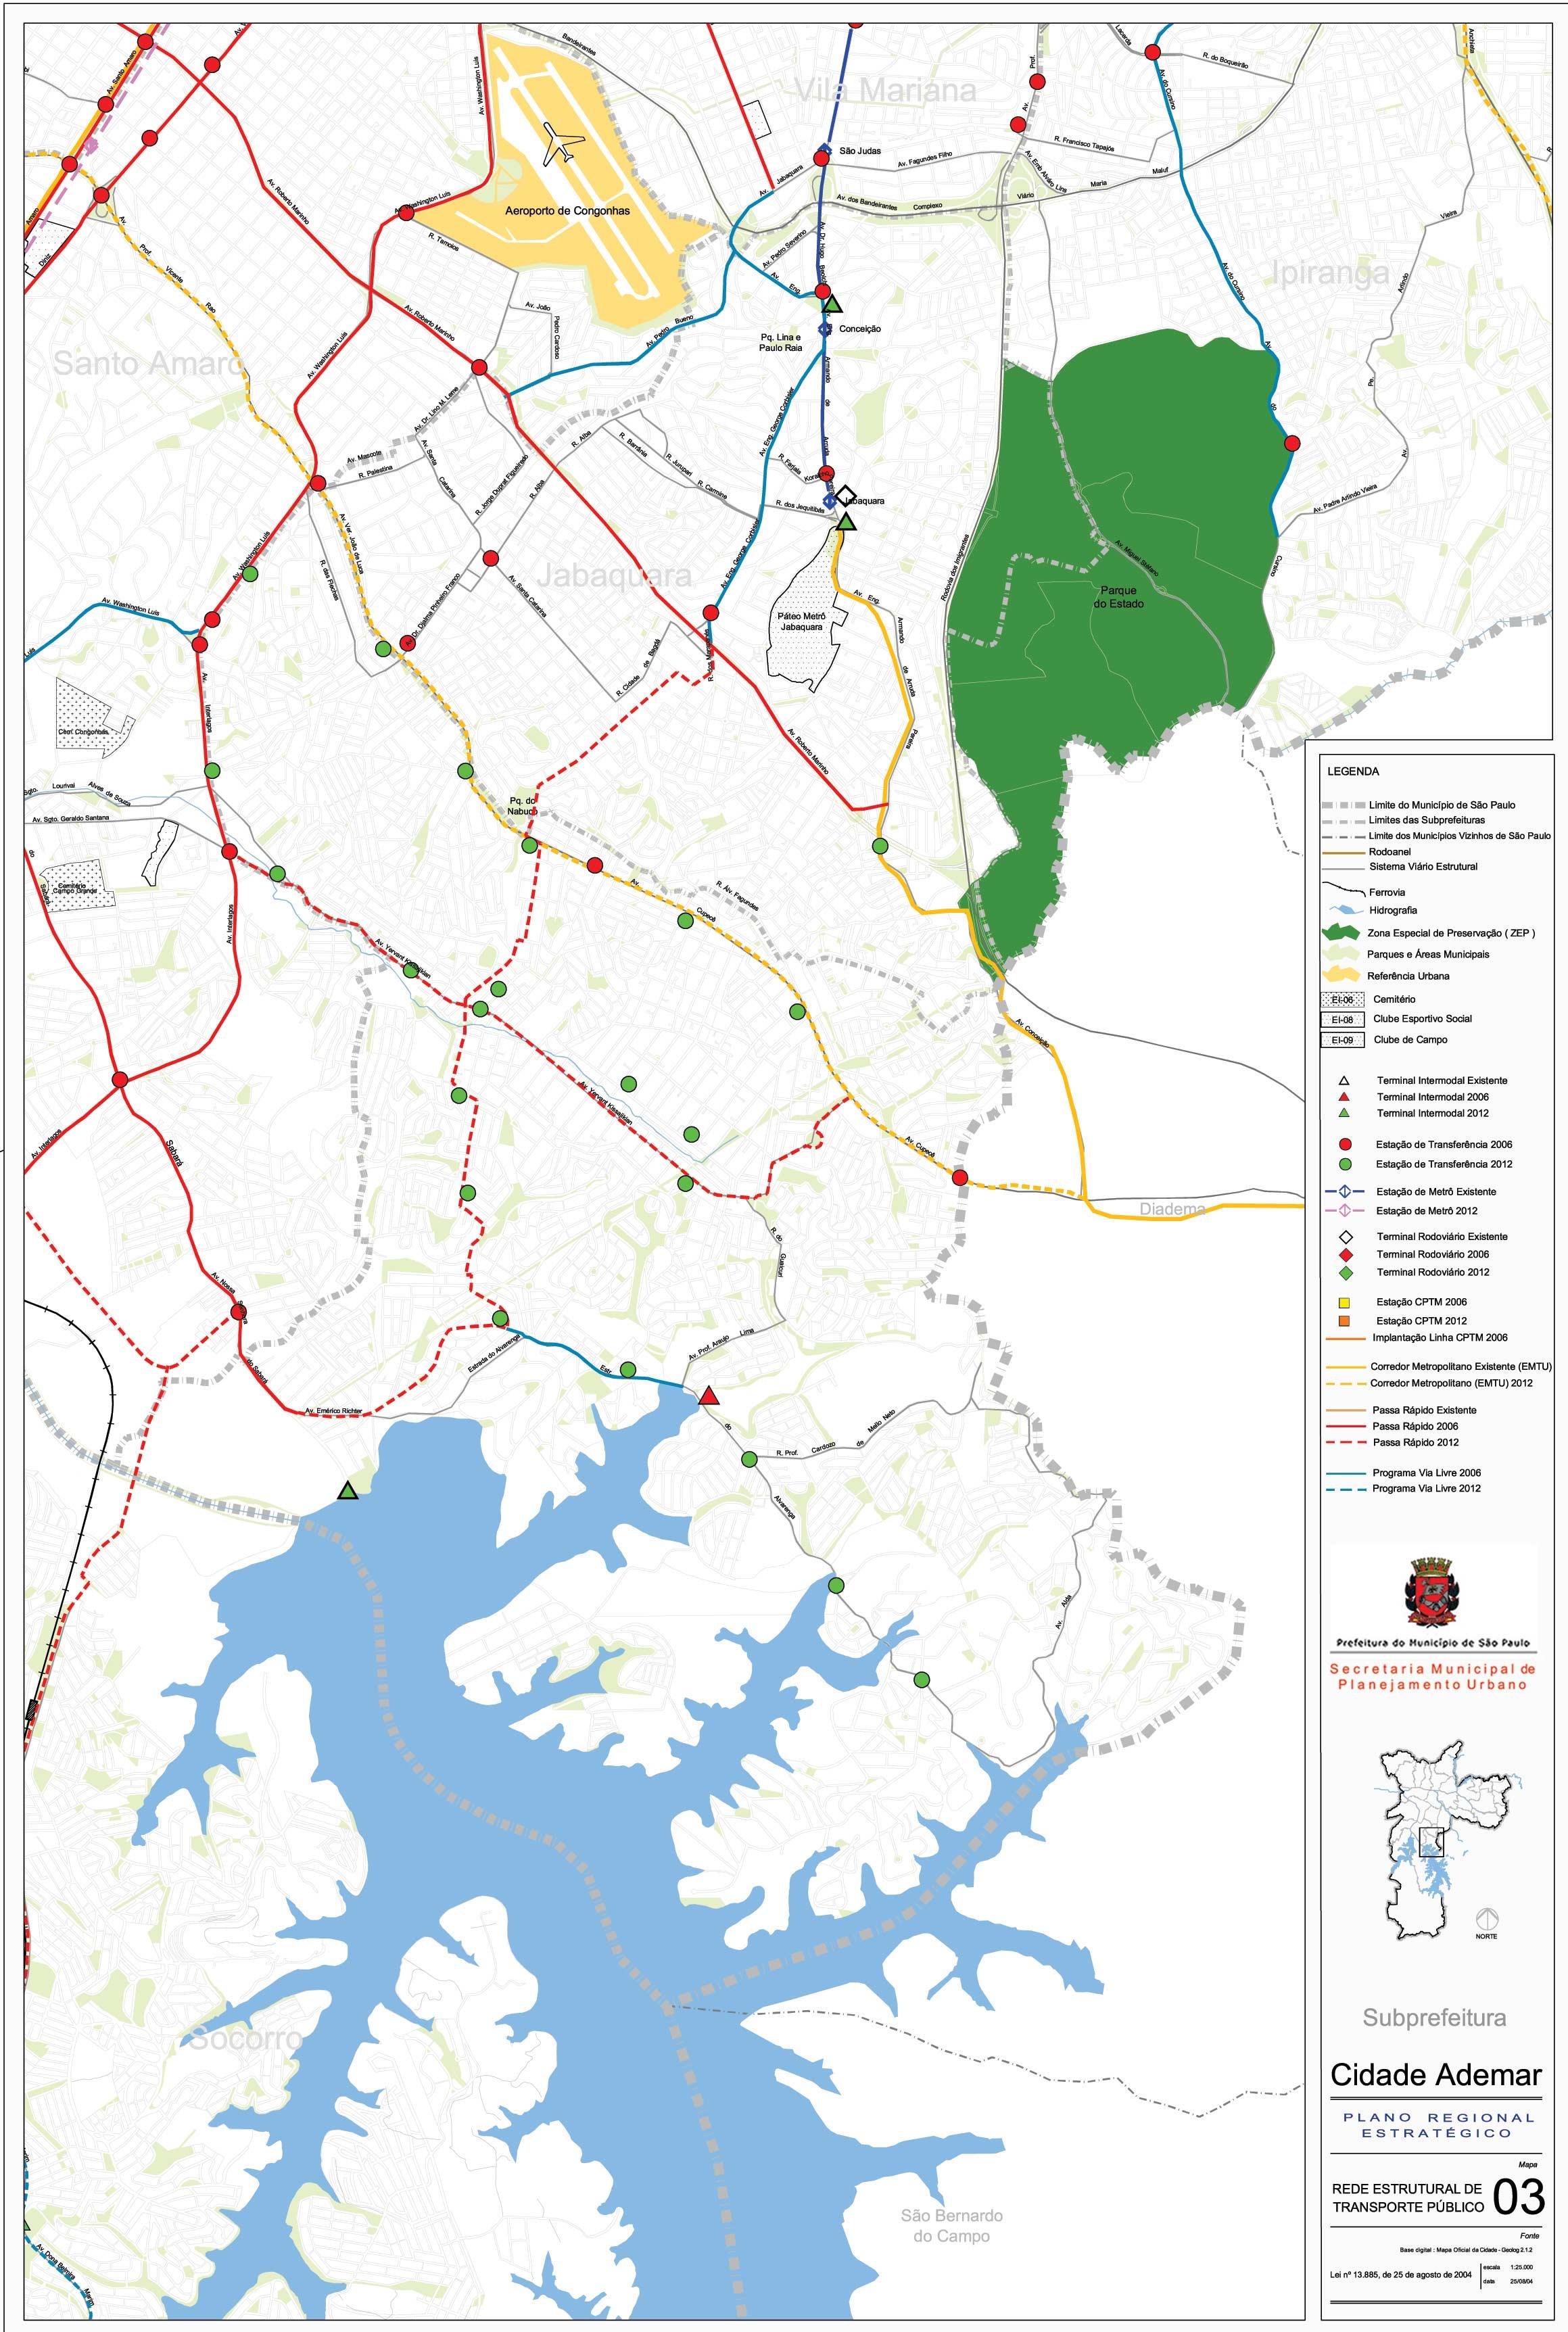 Cidade rauhoitu. - haloo São Paulo - Julkinen liikenne kartta - Kartta  Cidade rauhoitu. - haloo São Paulo - Julkinen liikenne (Brasilia)